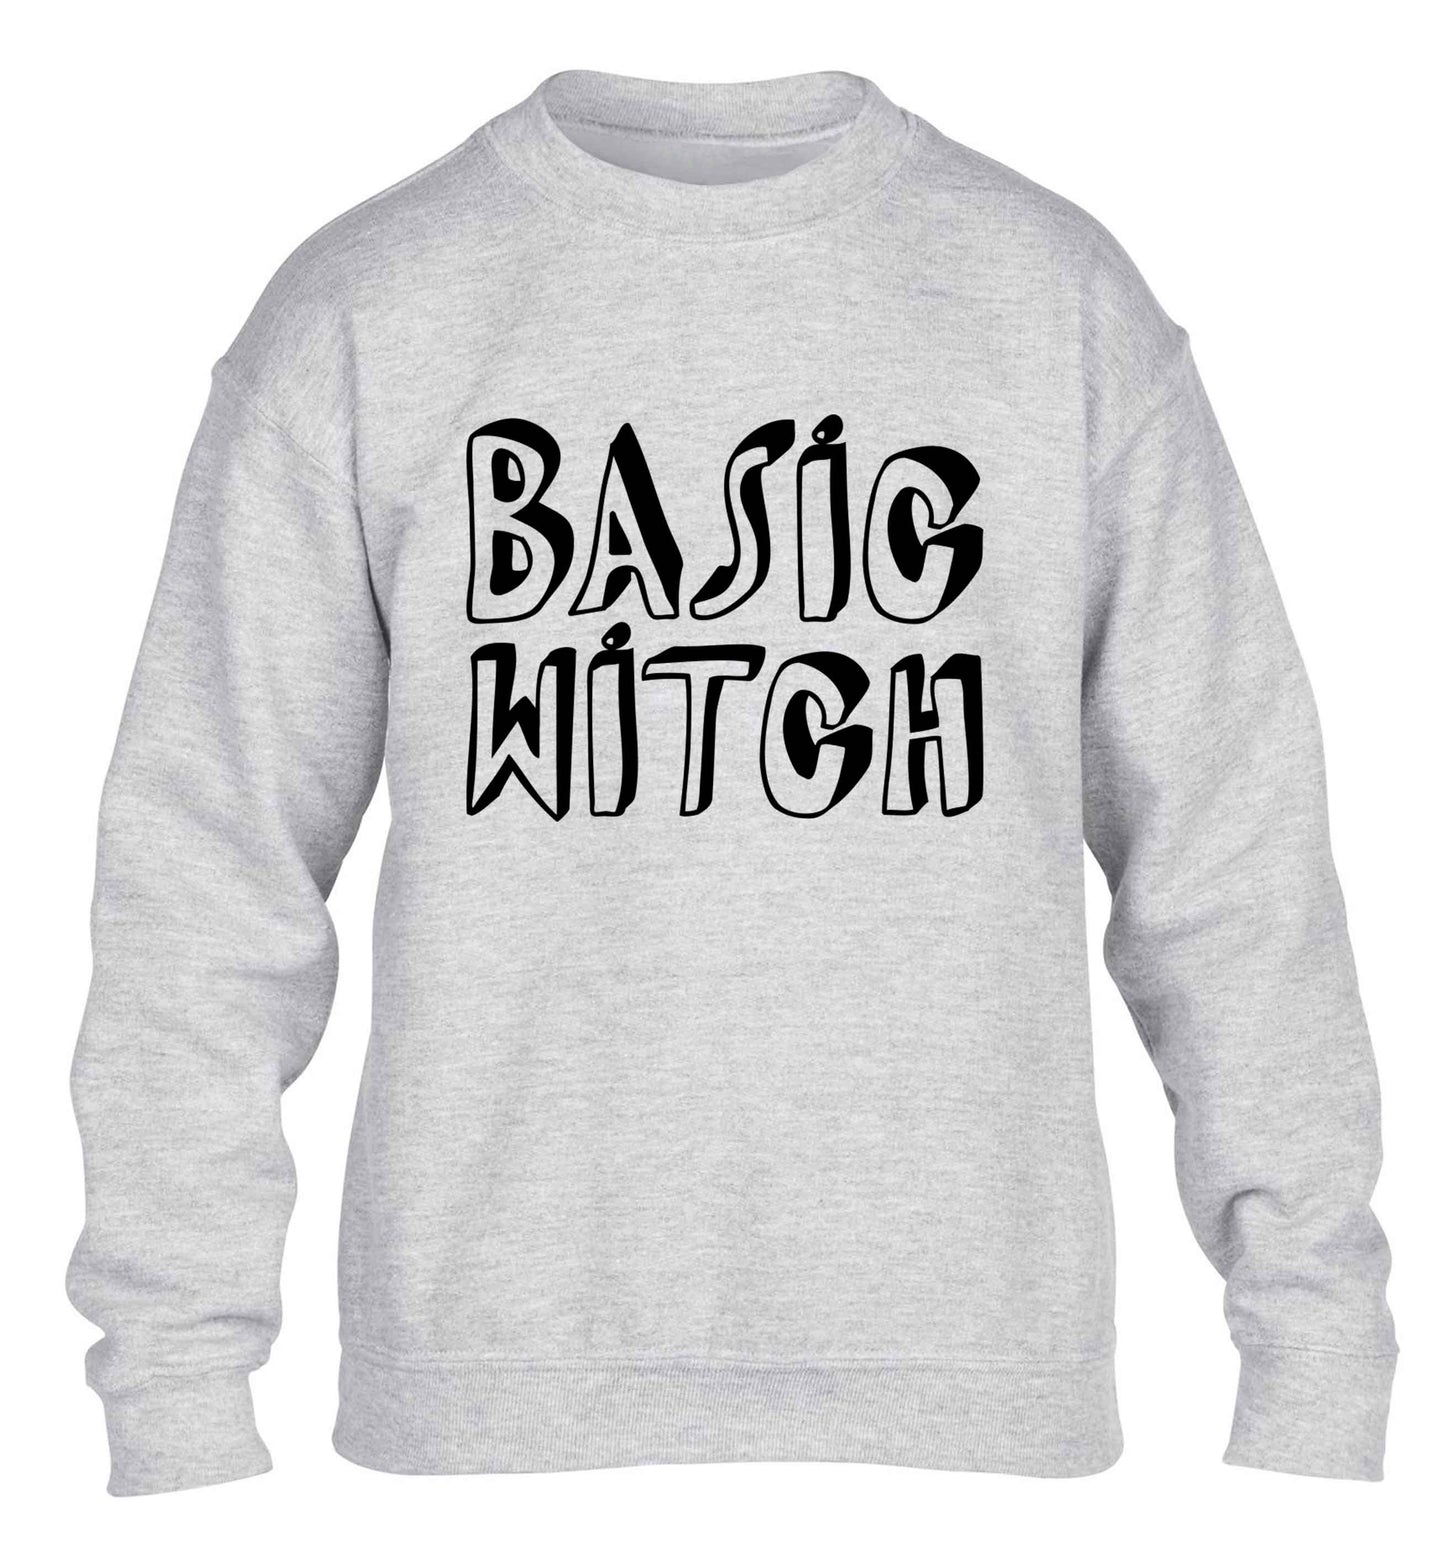 Basic witch children's grey sweater 12-13 Years